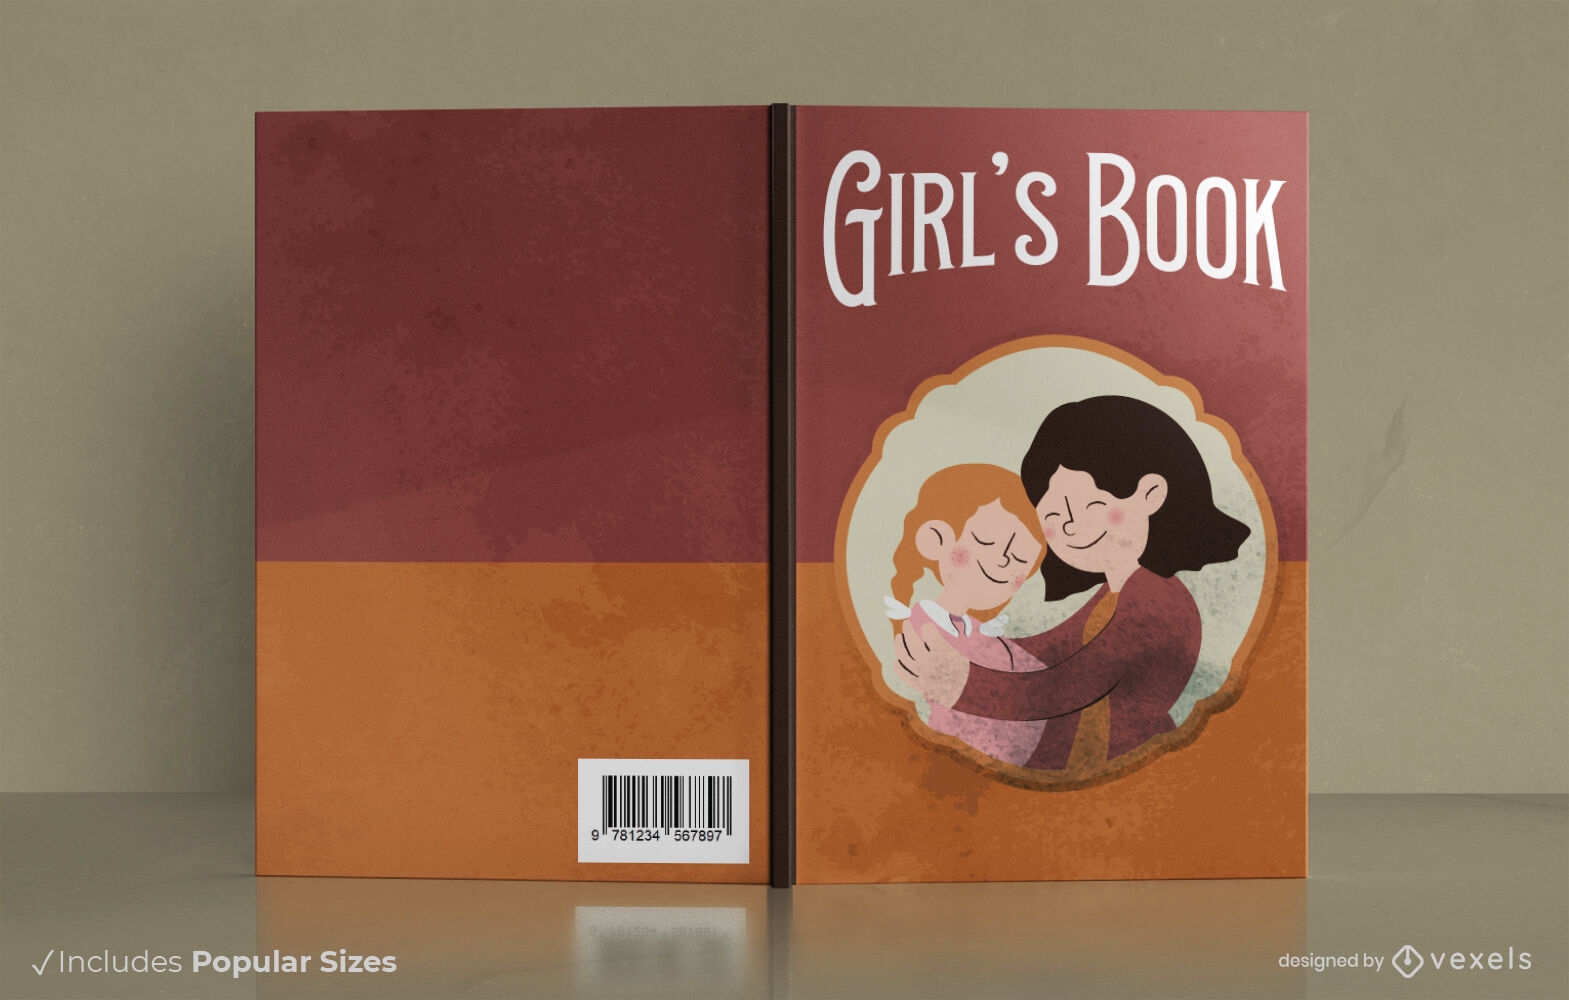 Girl's book cover design